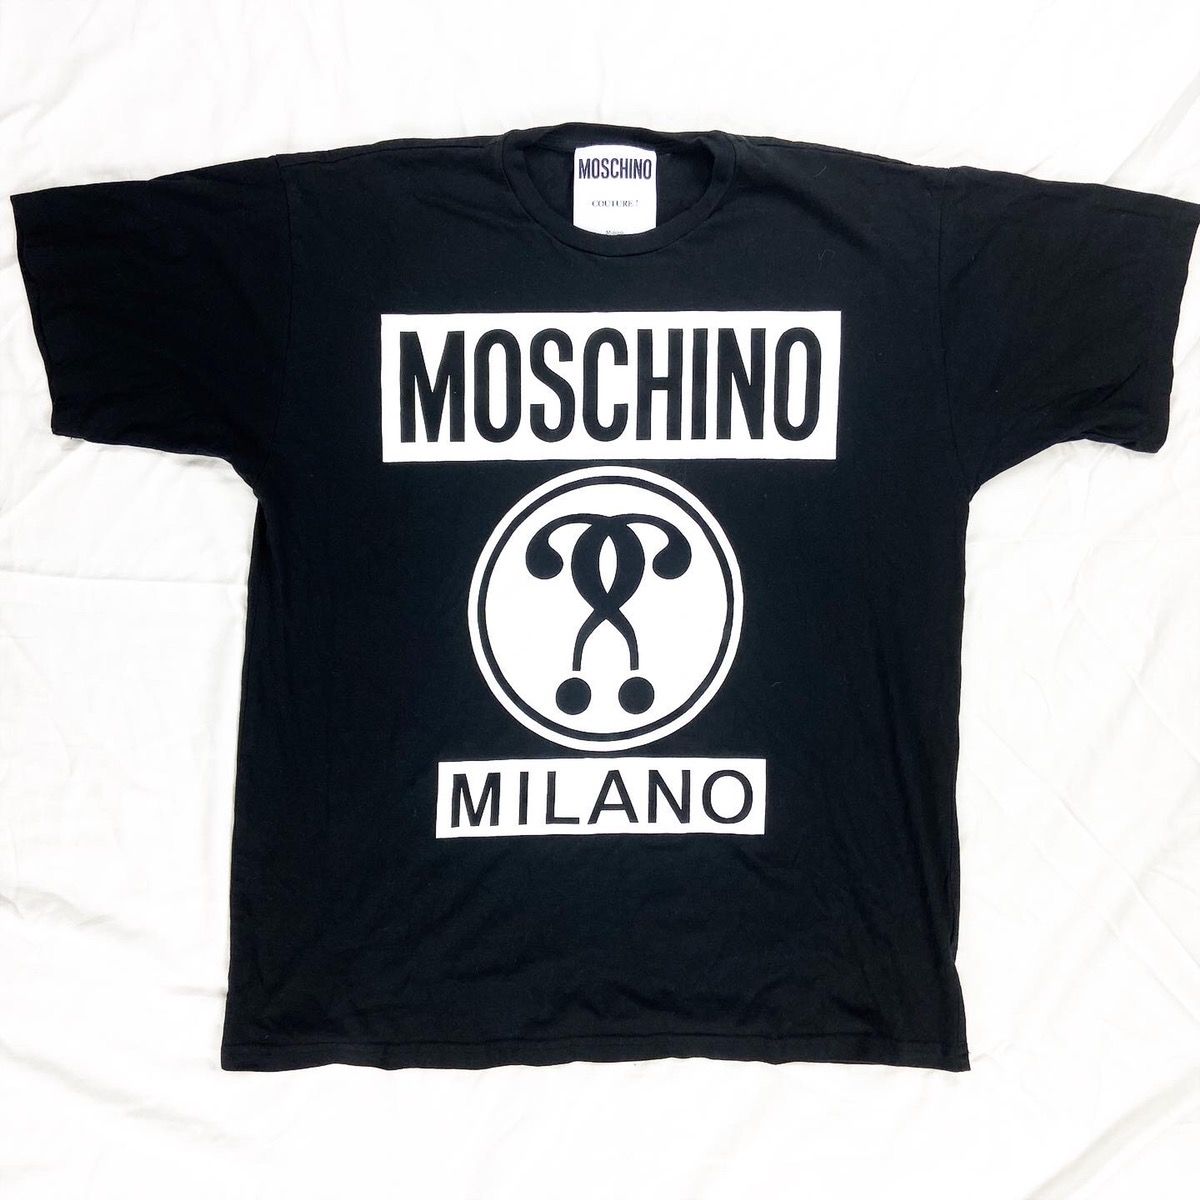 Moschino Moschino Milano Logo Tee Shirt Size US XL / EU 56 / 4 - 1 Preview